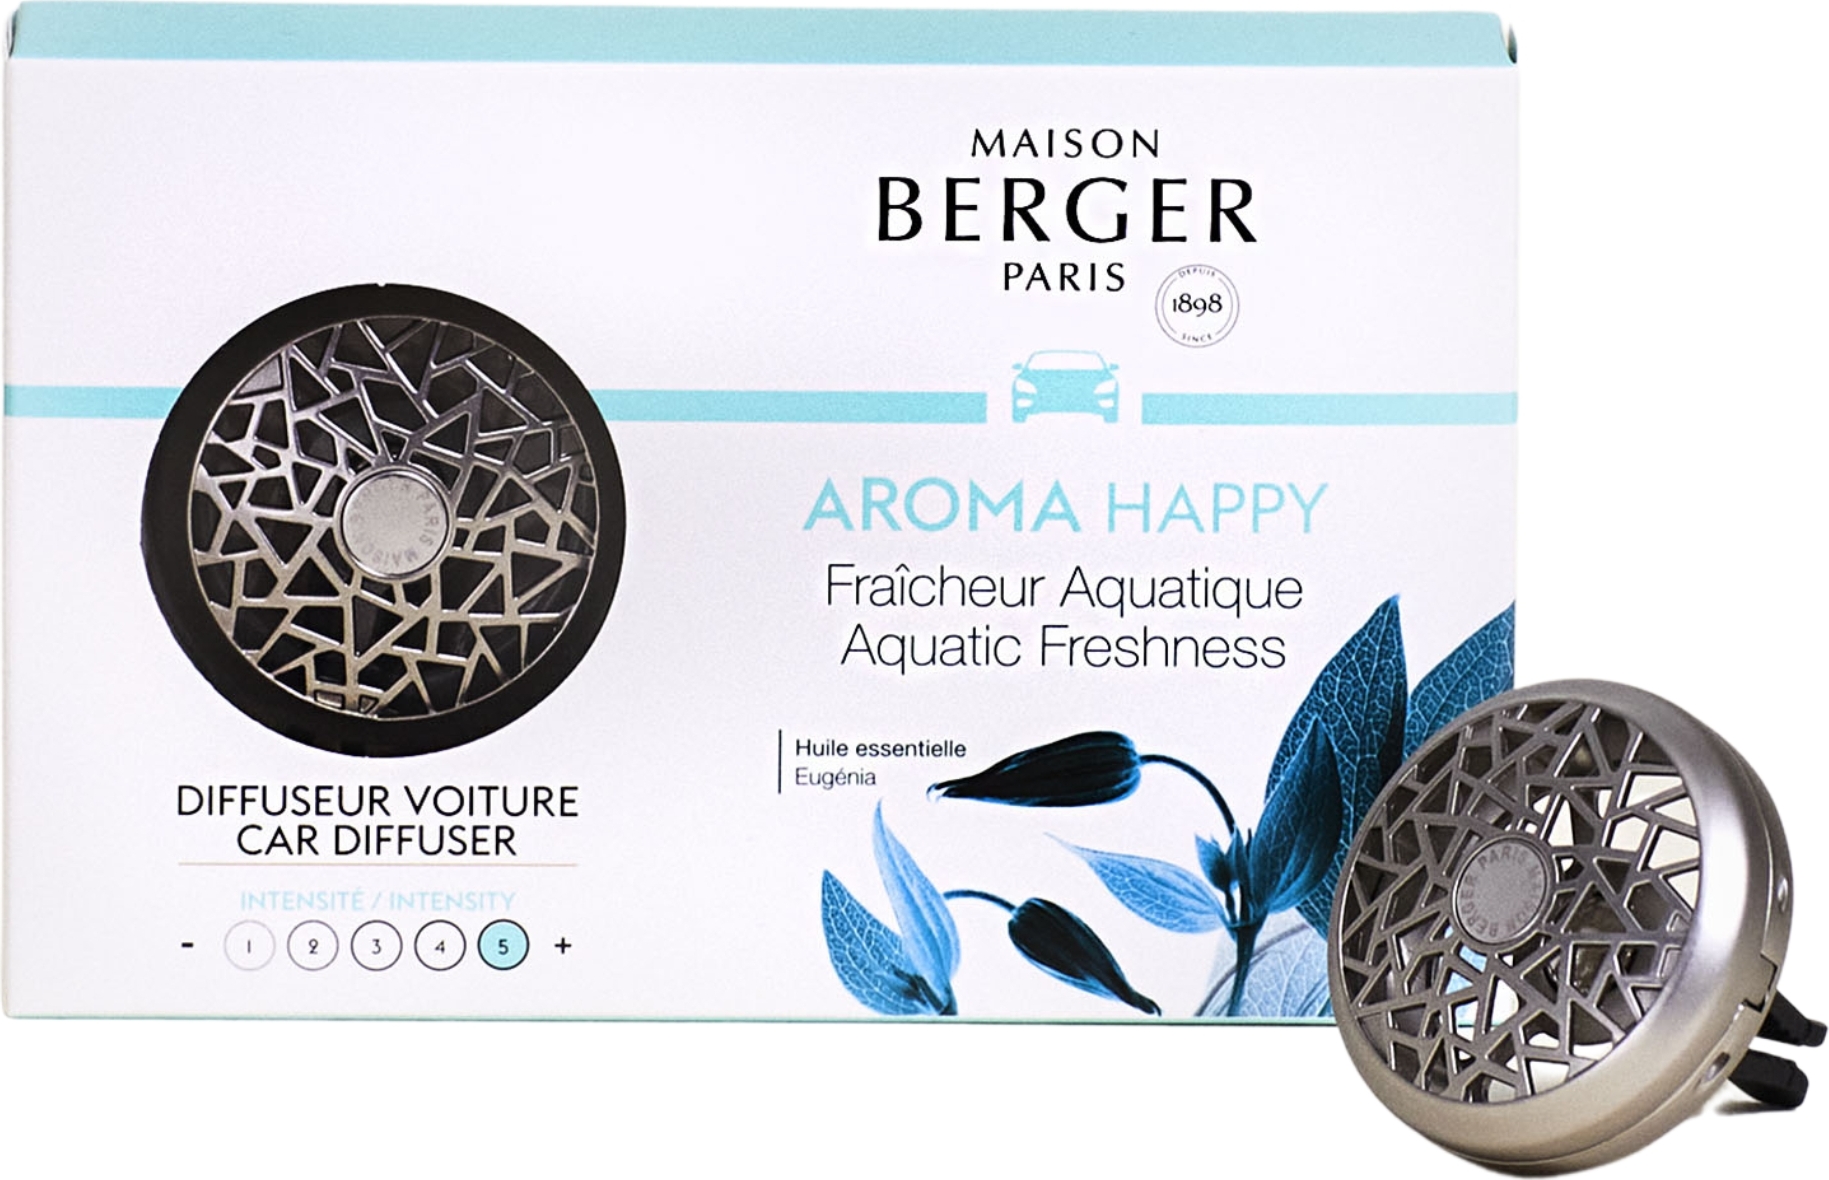 Aroma Happy Autoduft Diffuser - Maison Berger Paris 6403